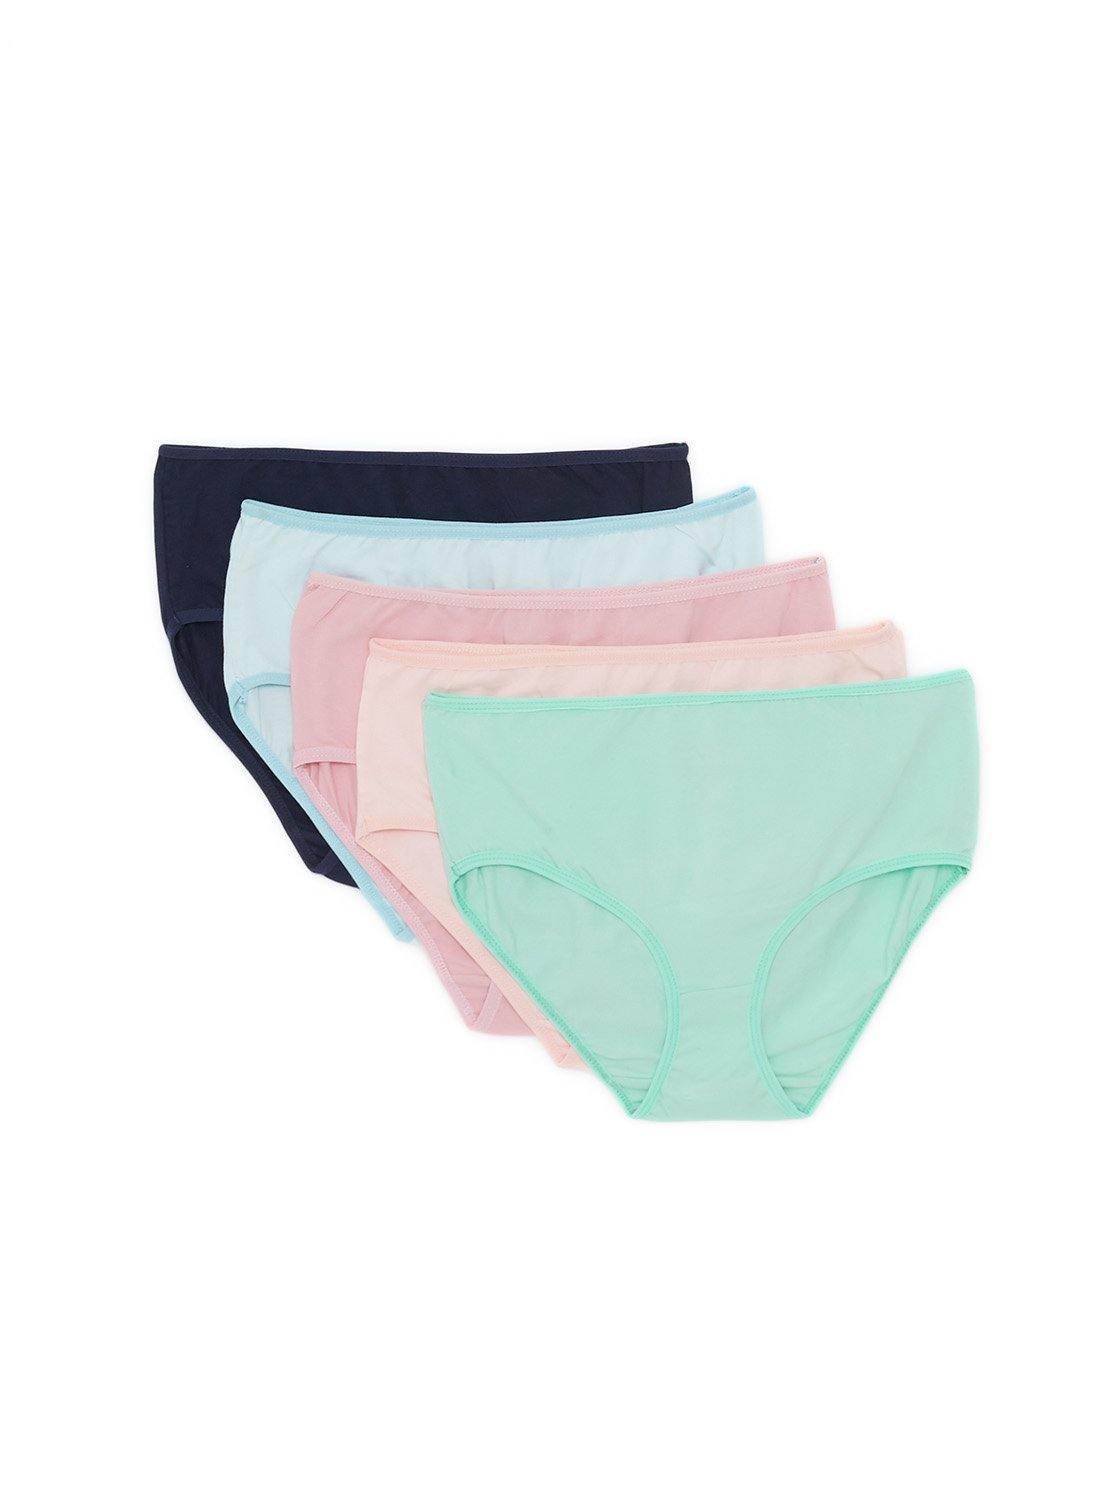 Eve Chantelle Multi Color Underwear - High Waist Cut - Pack Of 5 Panties For Women - chantelleve